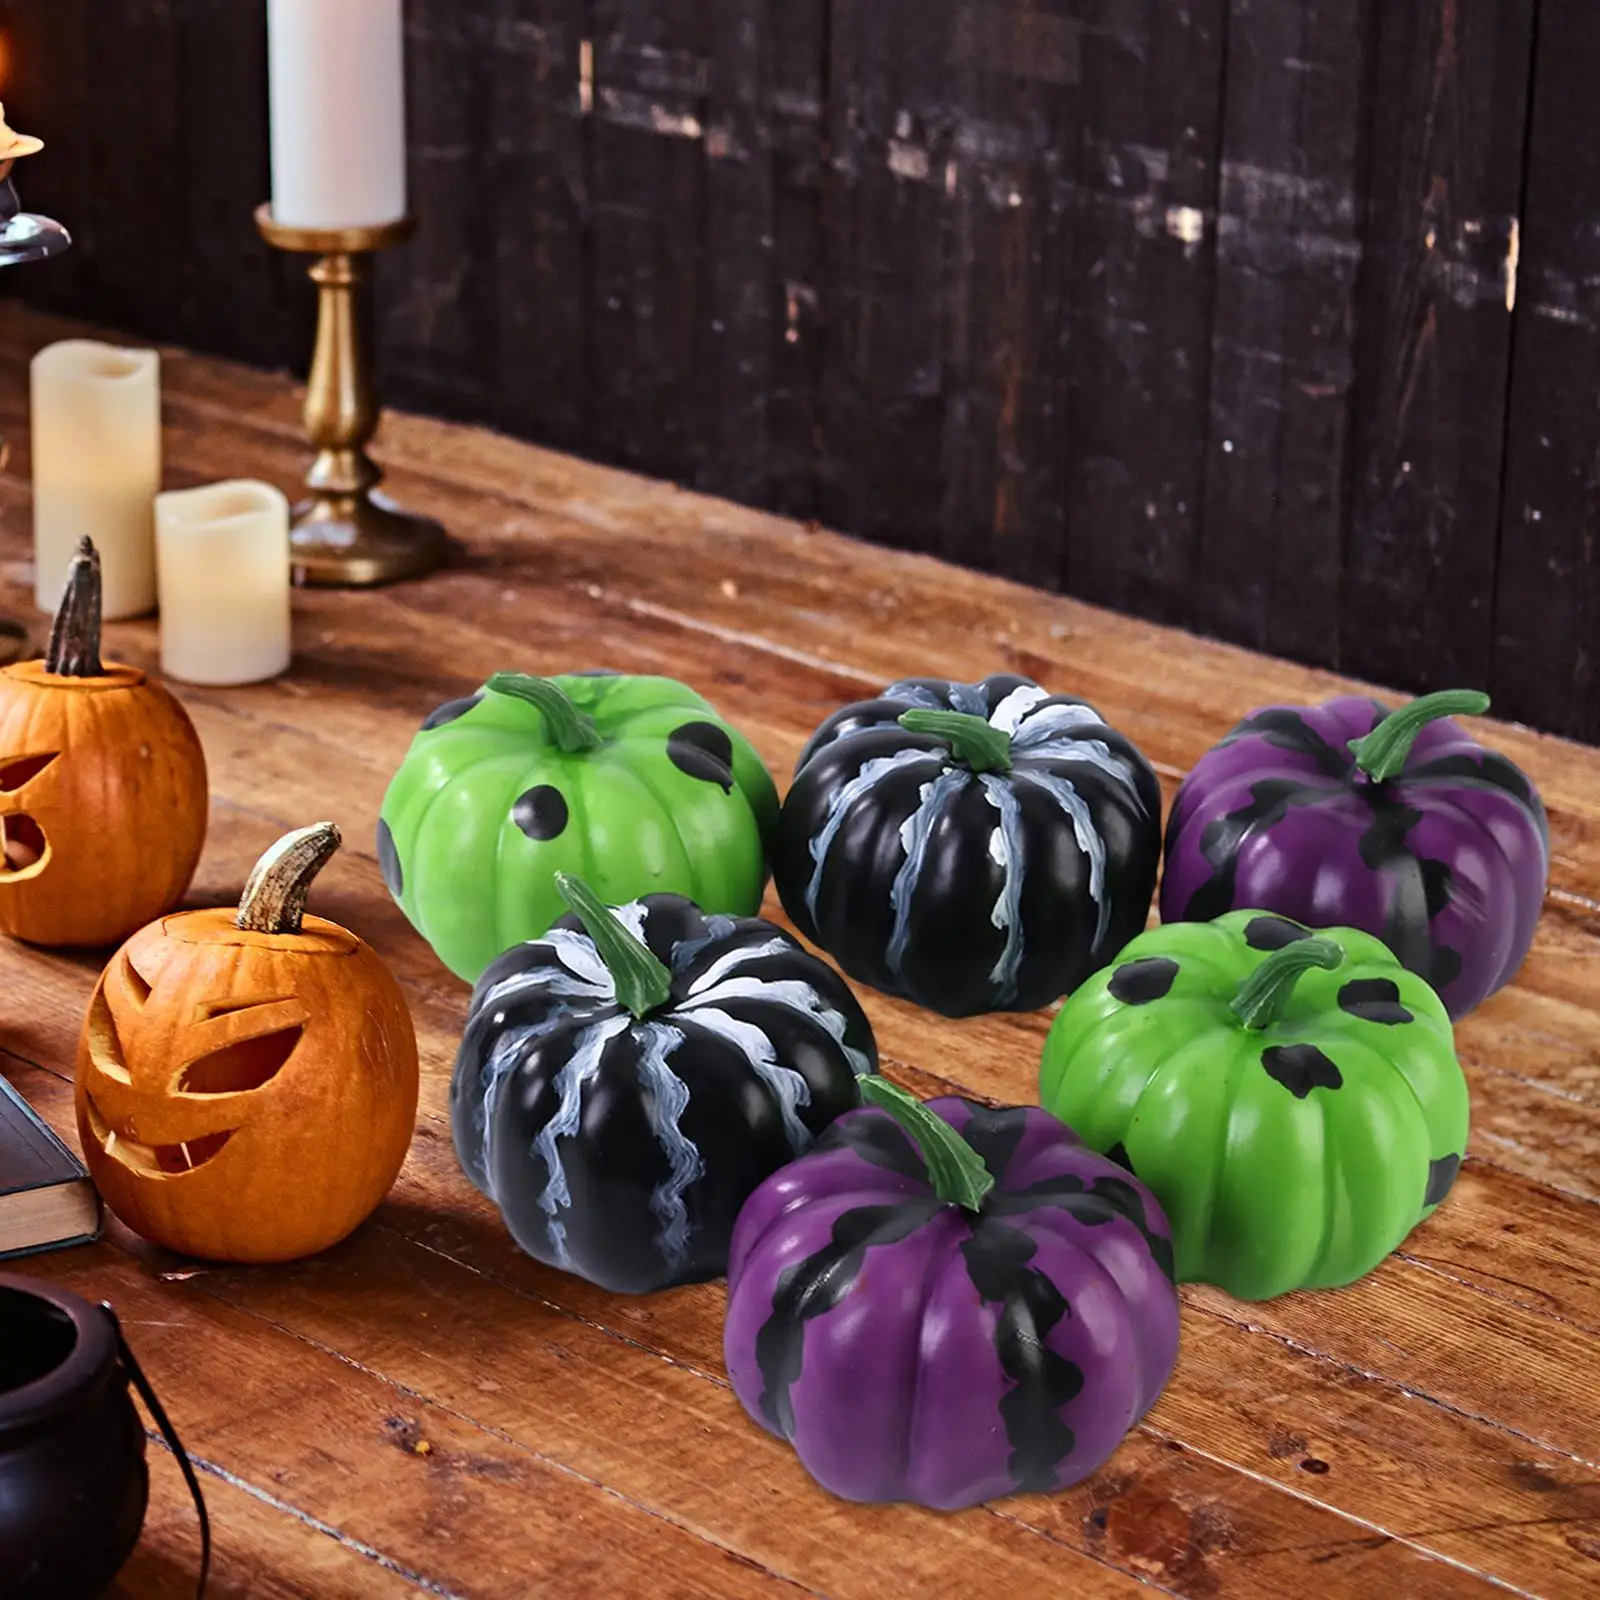 6x Fake Foam Pumpkins Mini Photography Props Harvest Decorative Mini Simulation Pumpkins Model for Table Kitchen Fall Home Decor